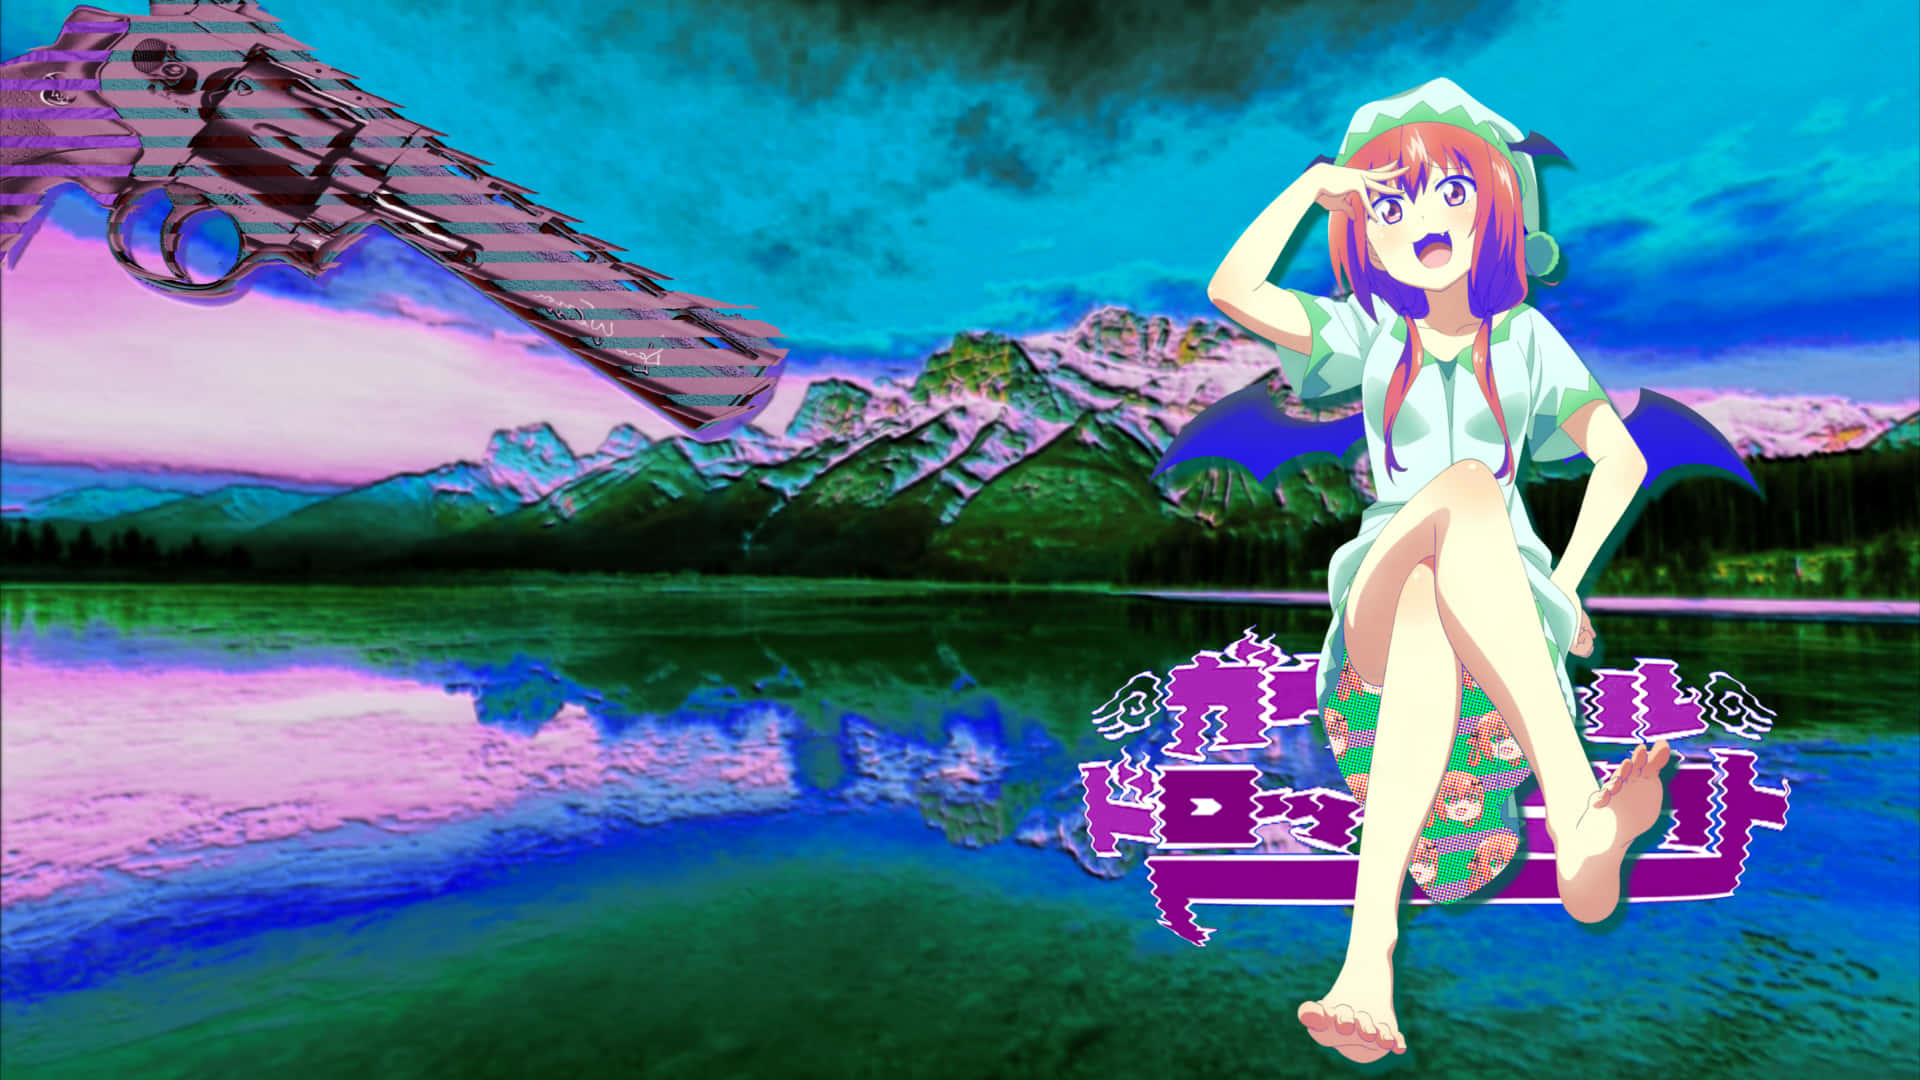 Enjoy this Colorful, Cute Aesthetic Anime Desktop Wallpaper